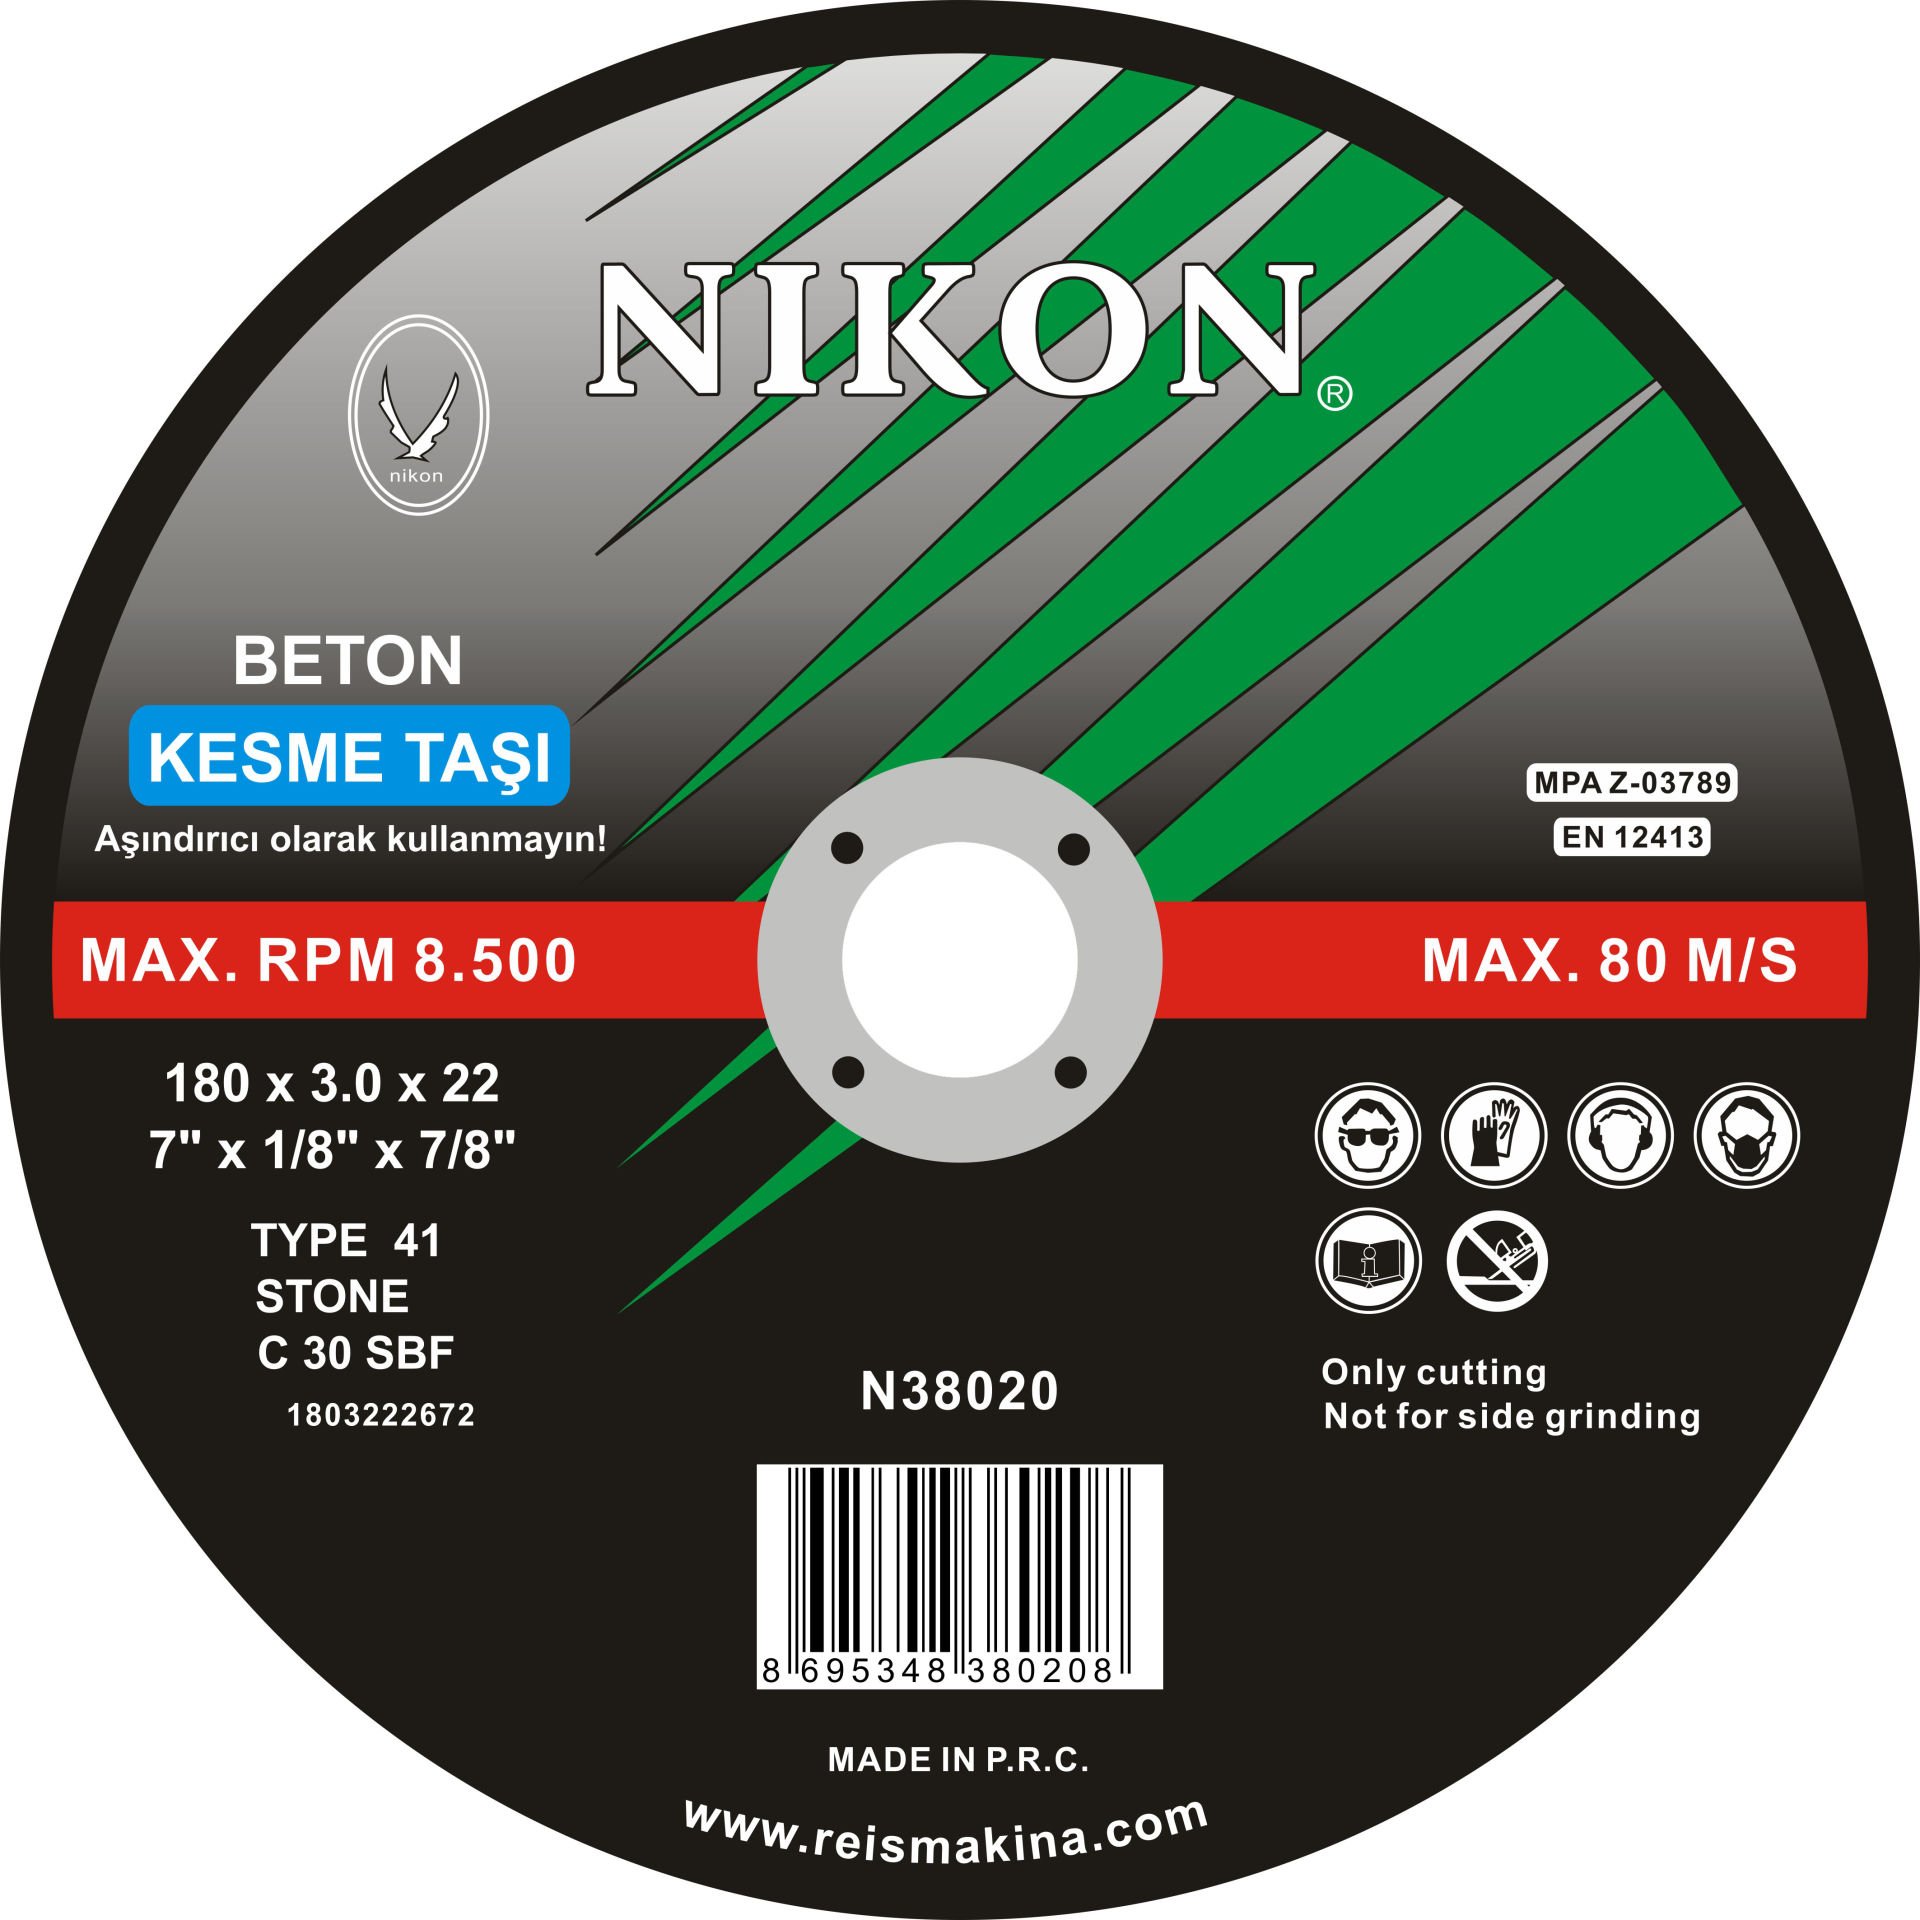 Nikon Beton Flex Kesme Taşı Düz 115x2.5x22mm 10 adet